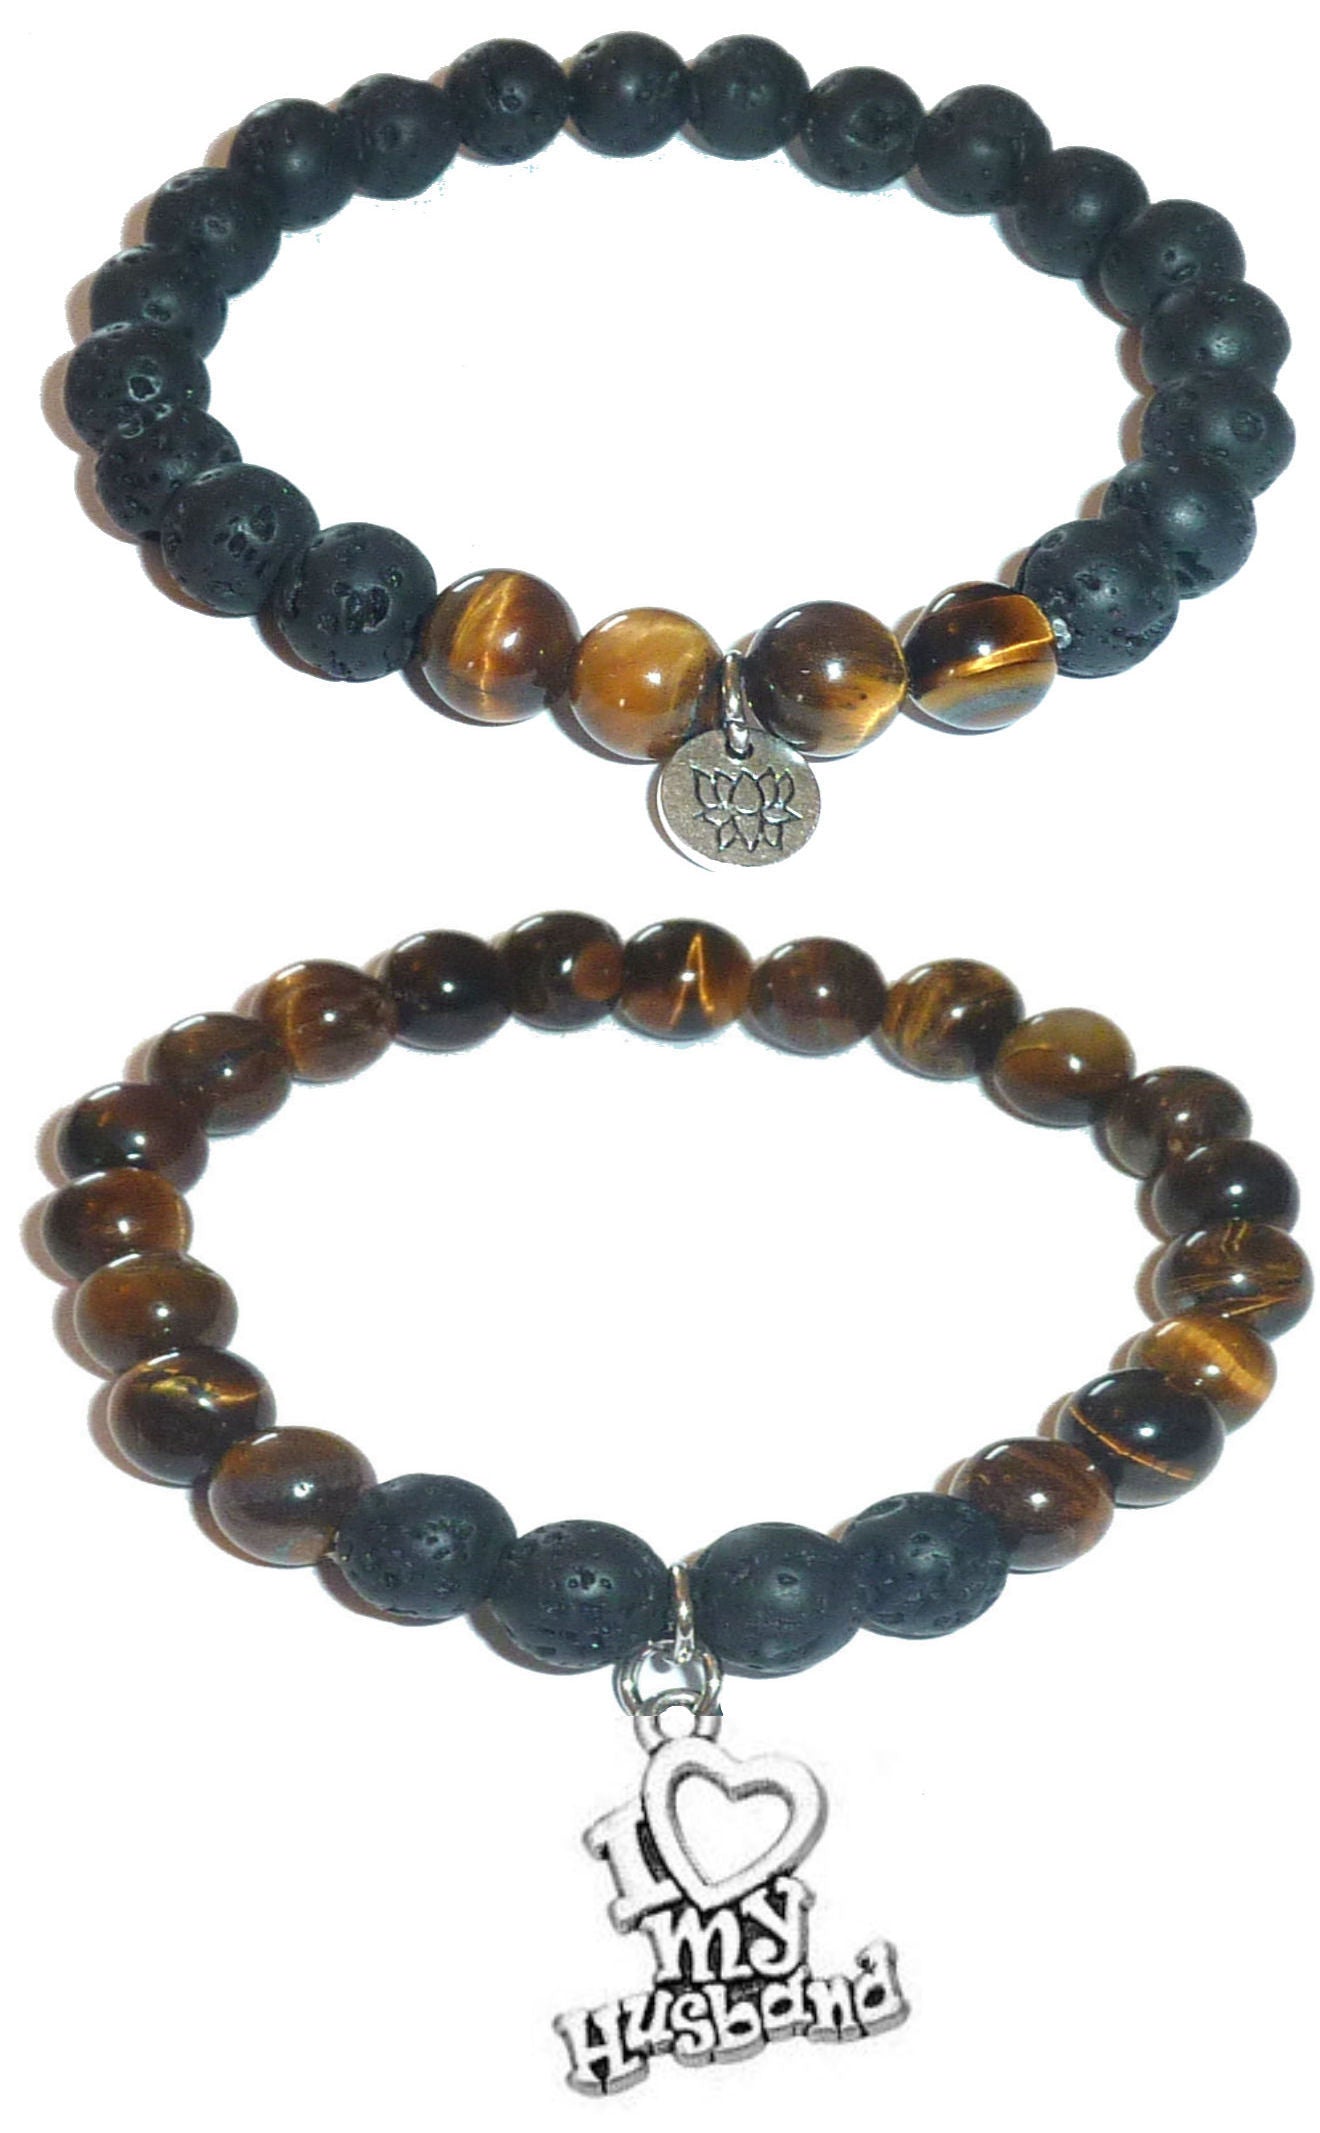 I Love My Husband - Women's Tiger Eye & Black Lava Diffuser Yoga Beads Charm Stretch Bracelet Gift Set